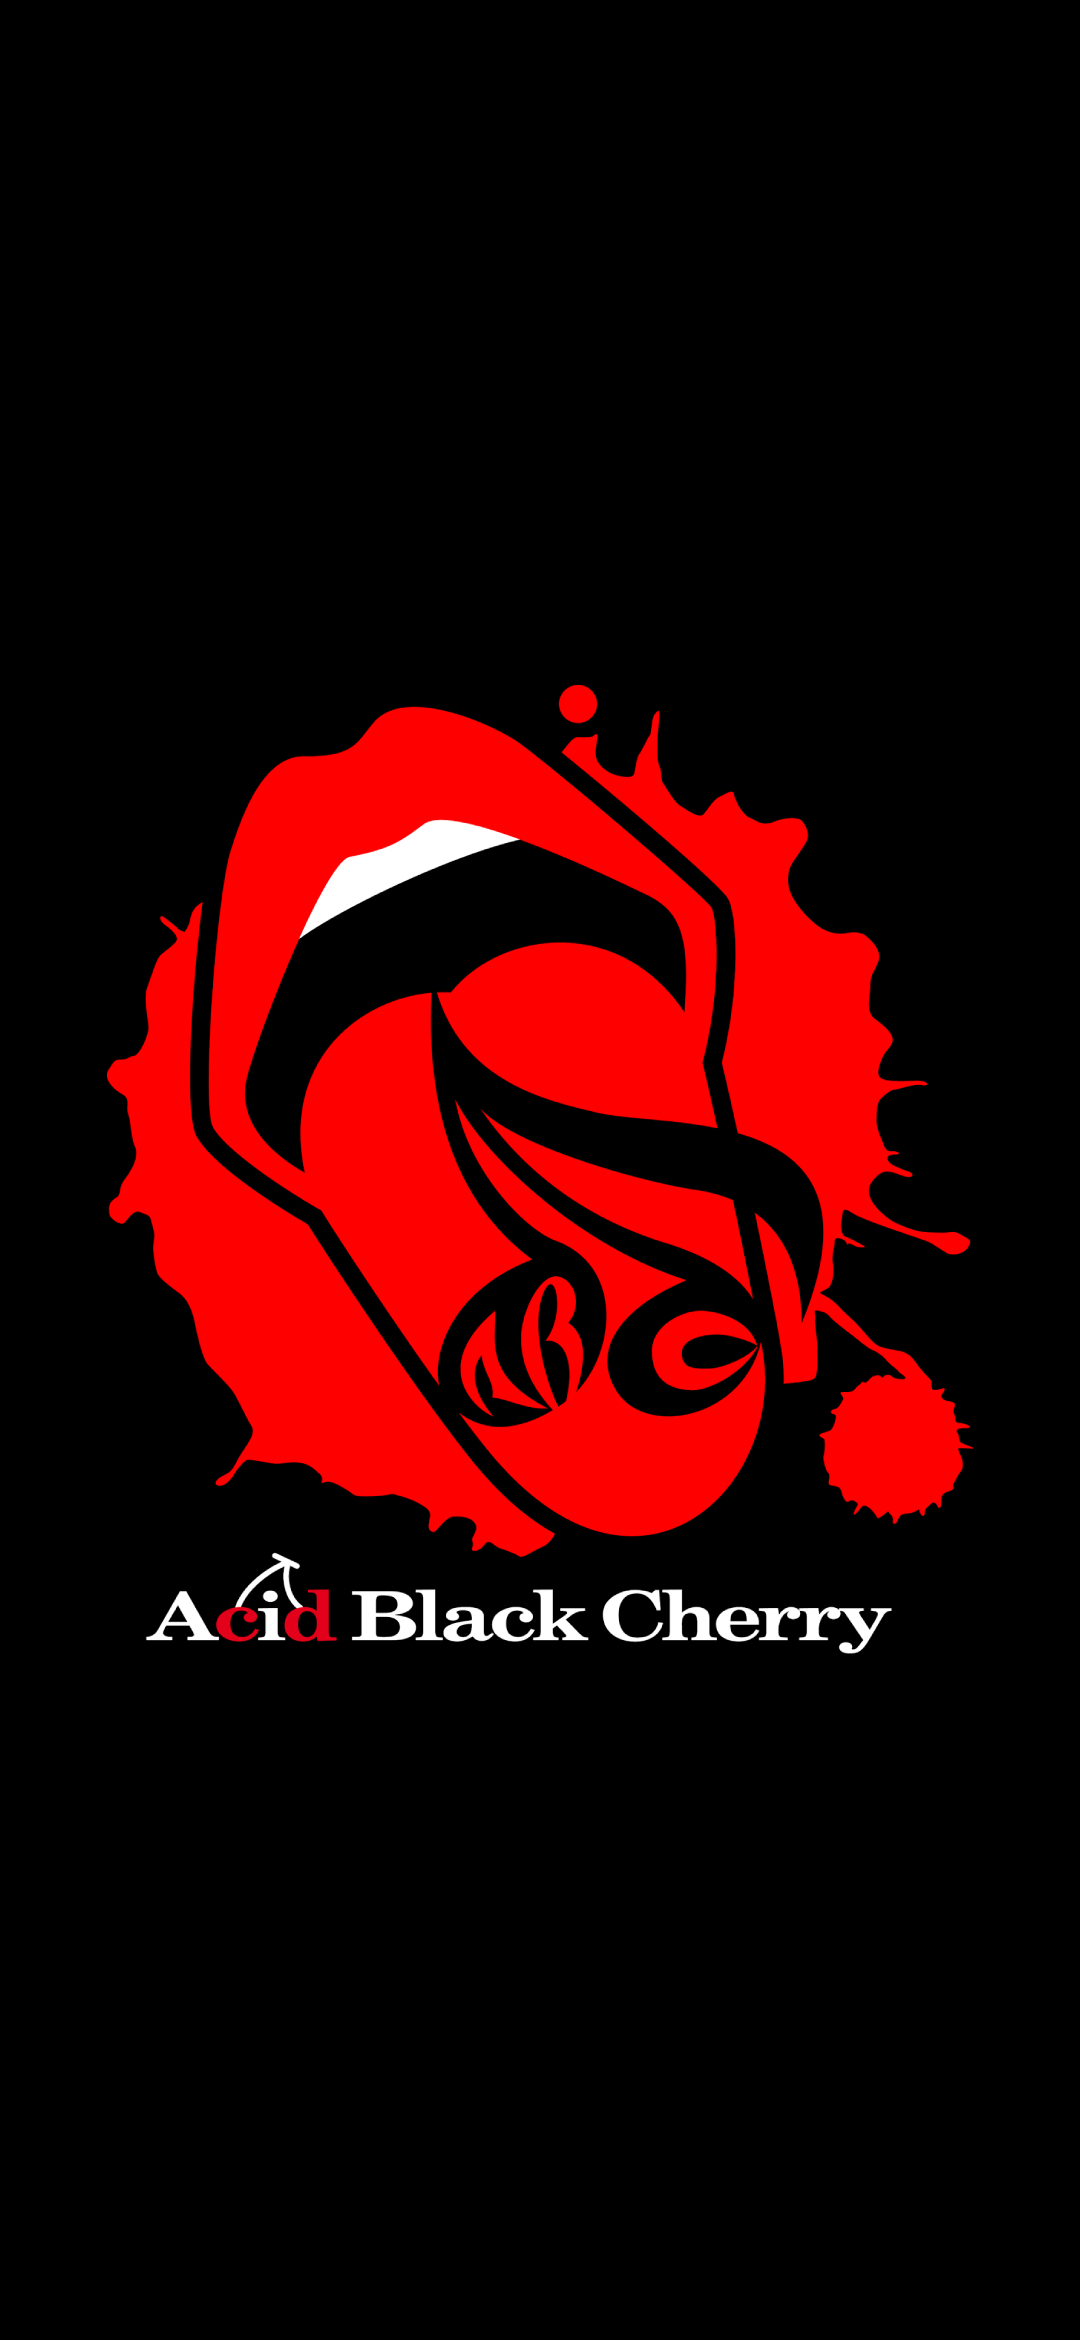 Acid Black Cherry 黒 Zte A1 壁紙 待ち受け スマラン